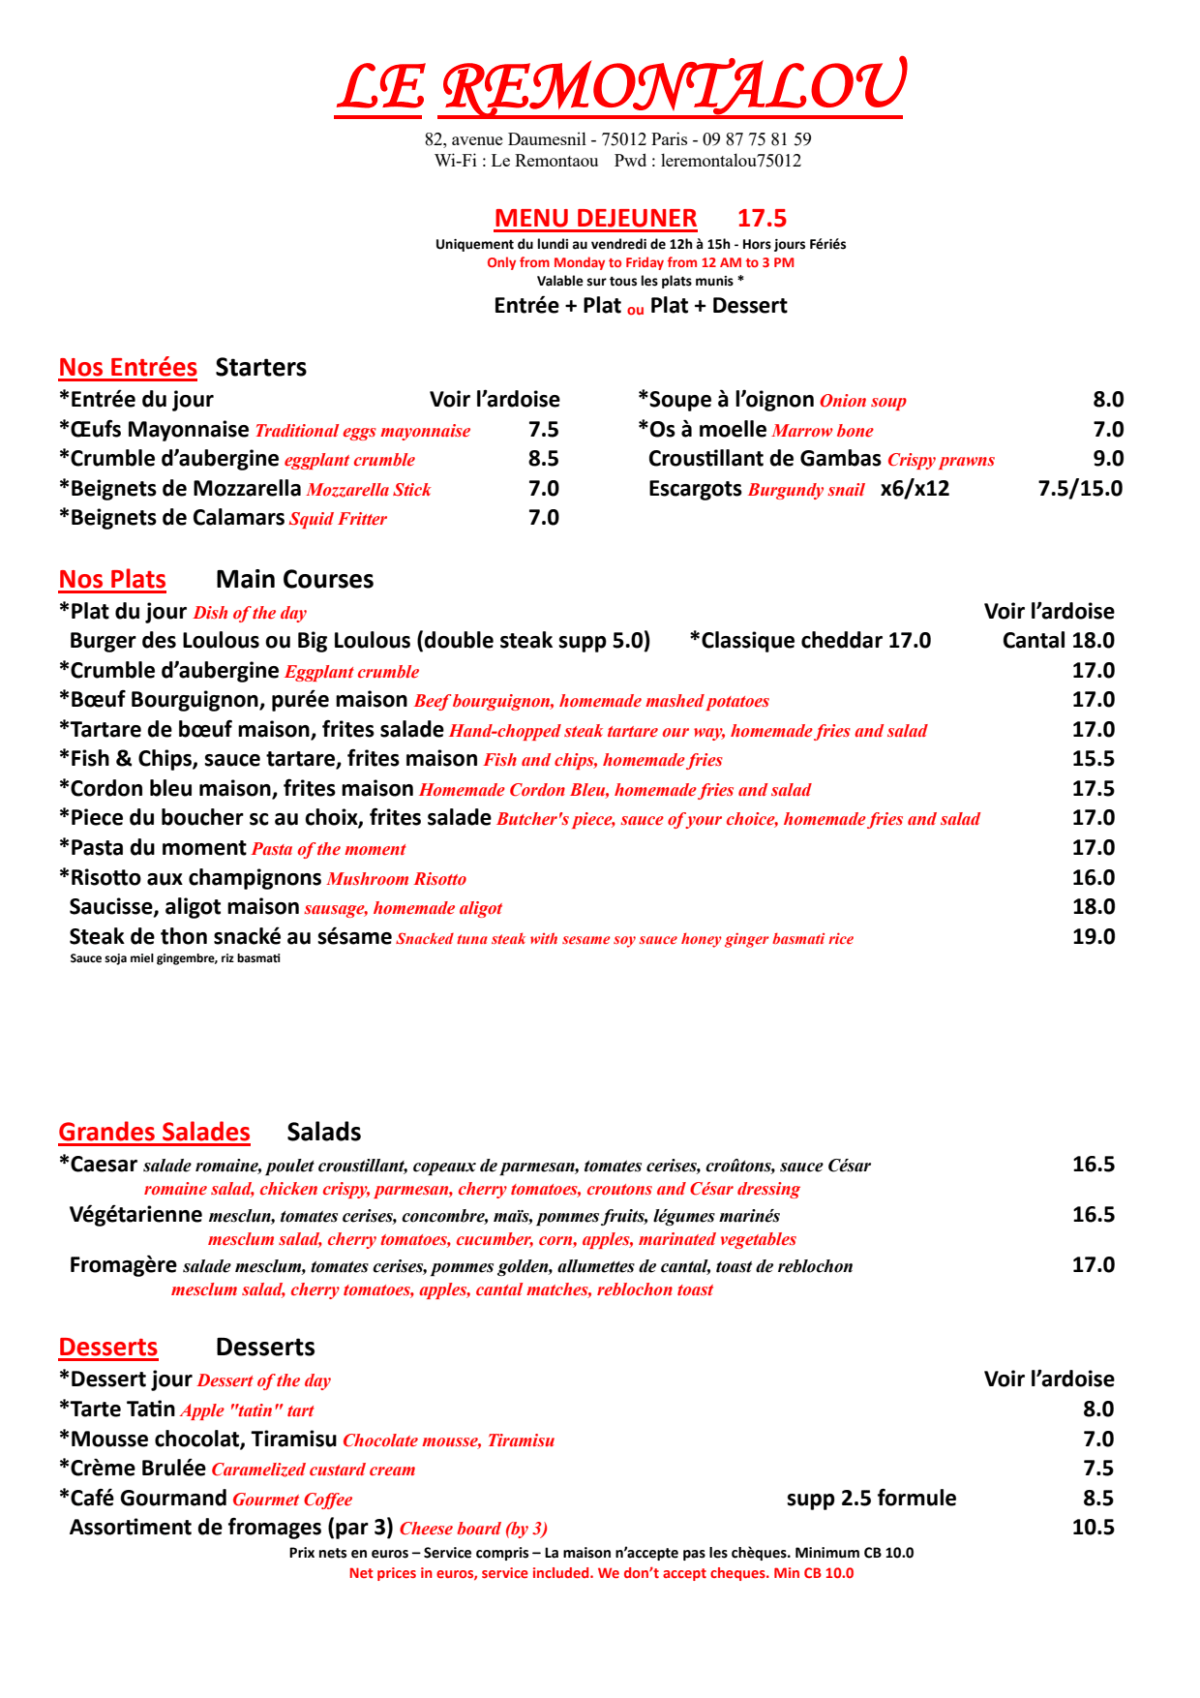 Le Remontalou menu